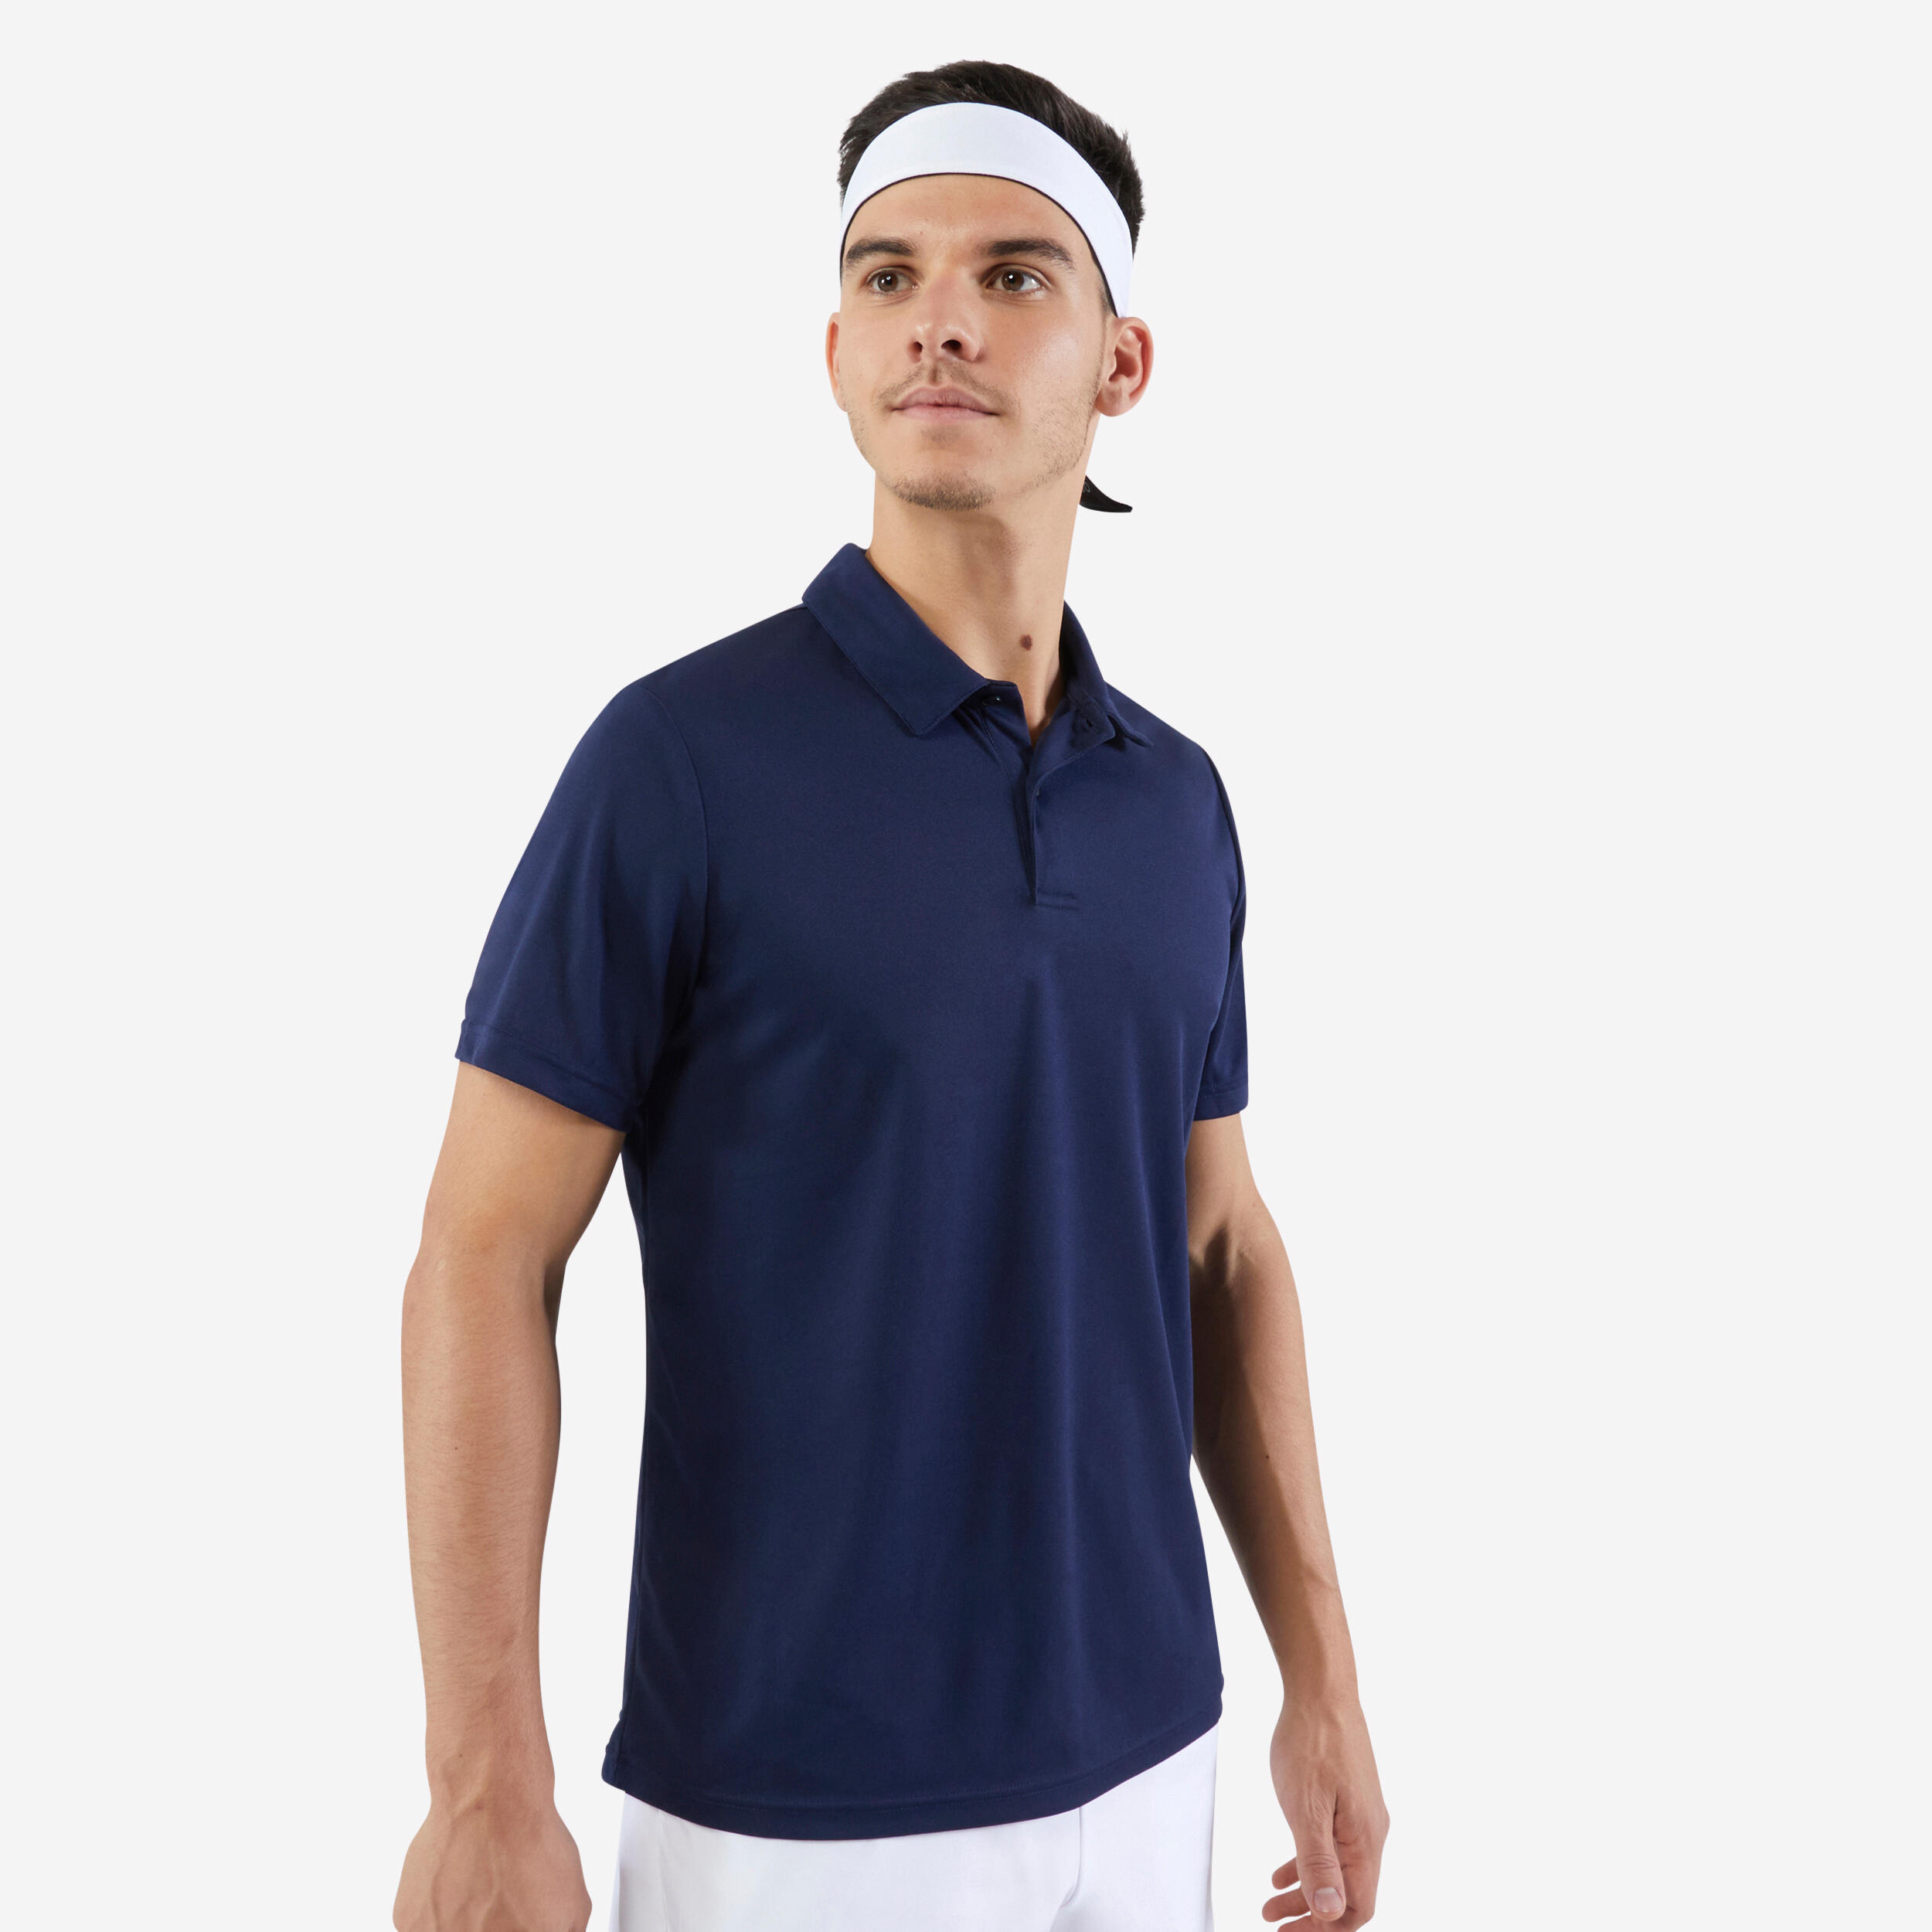 Men's Golf Polo Shirt - WW 500 Black - smoked black - Inesis - Decathlon